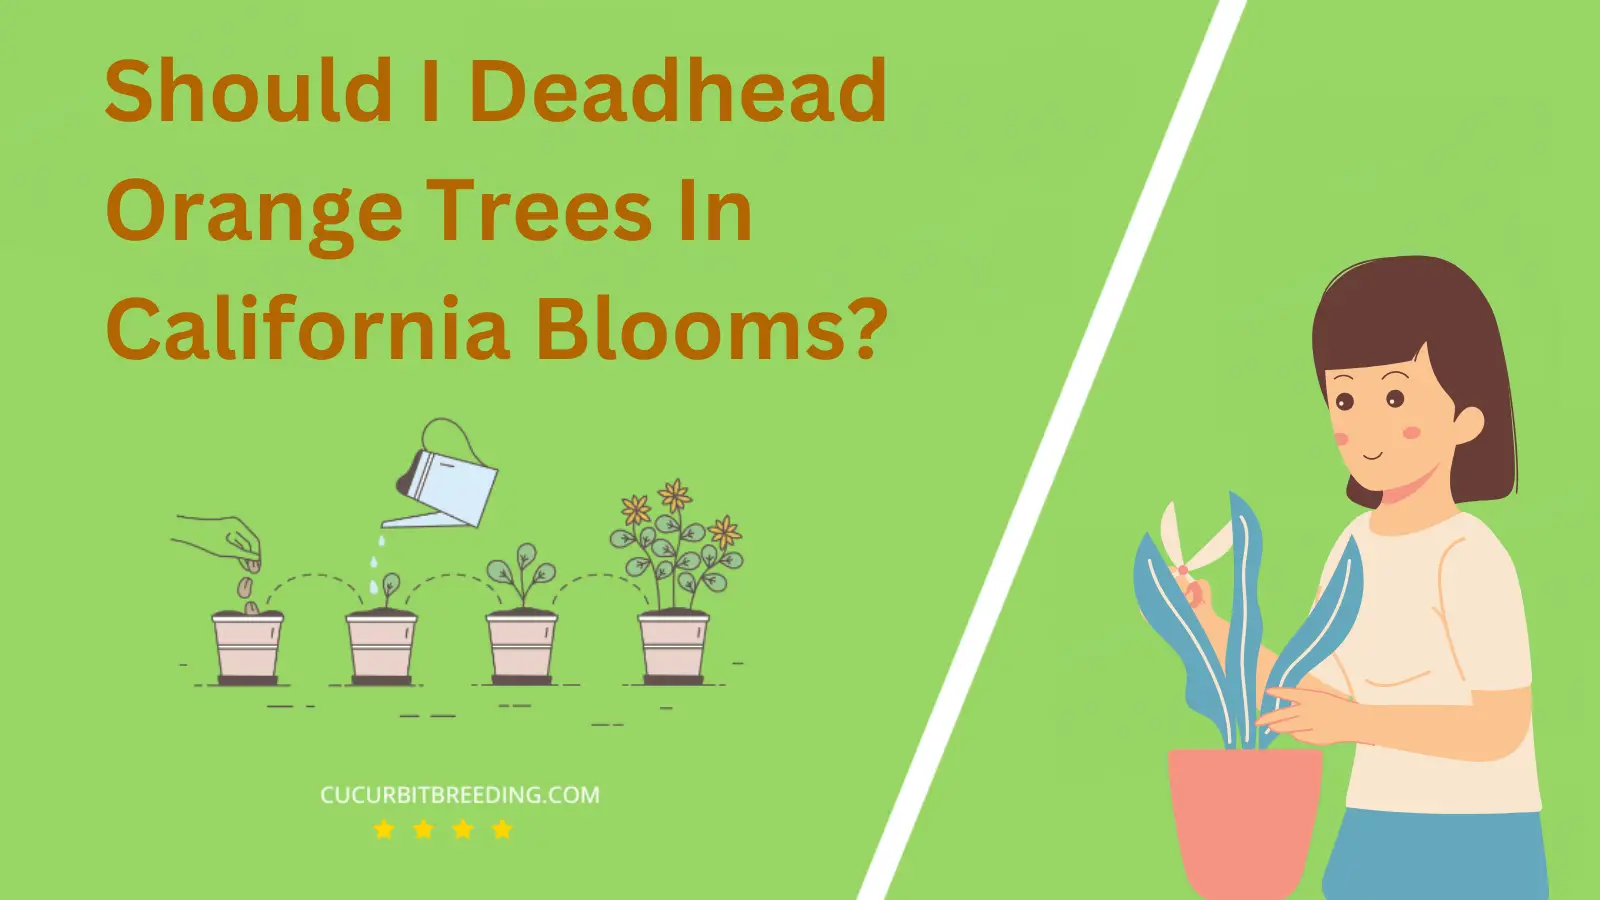 Should I Deadhead Orange Trees In California Blooms?